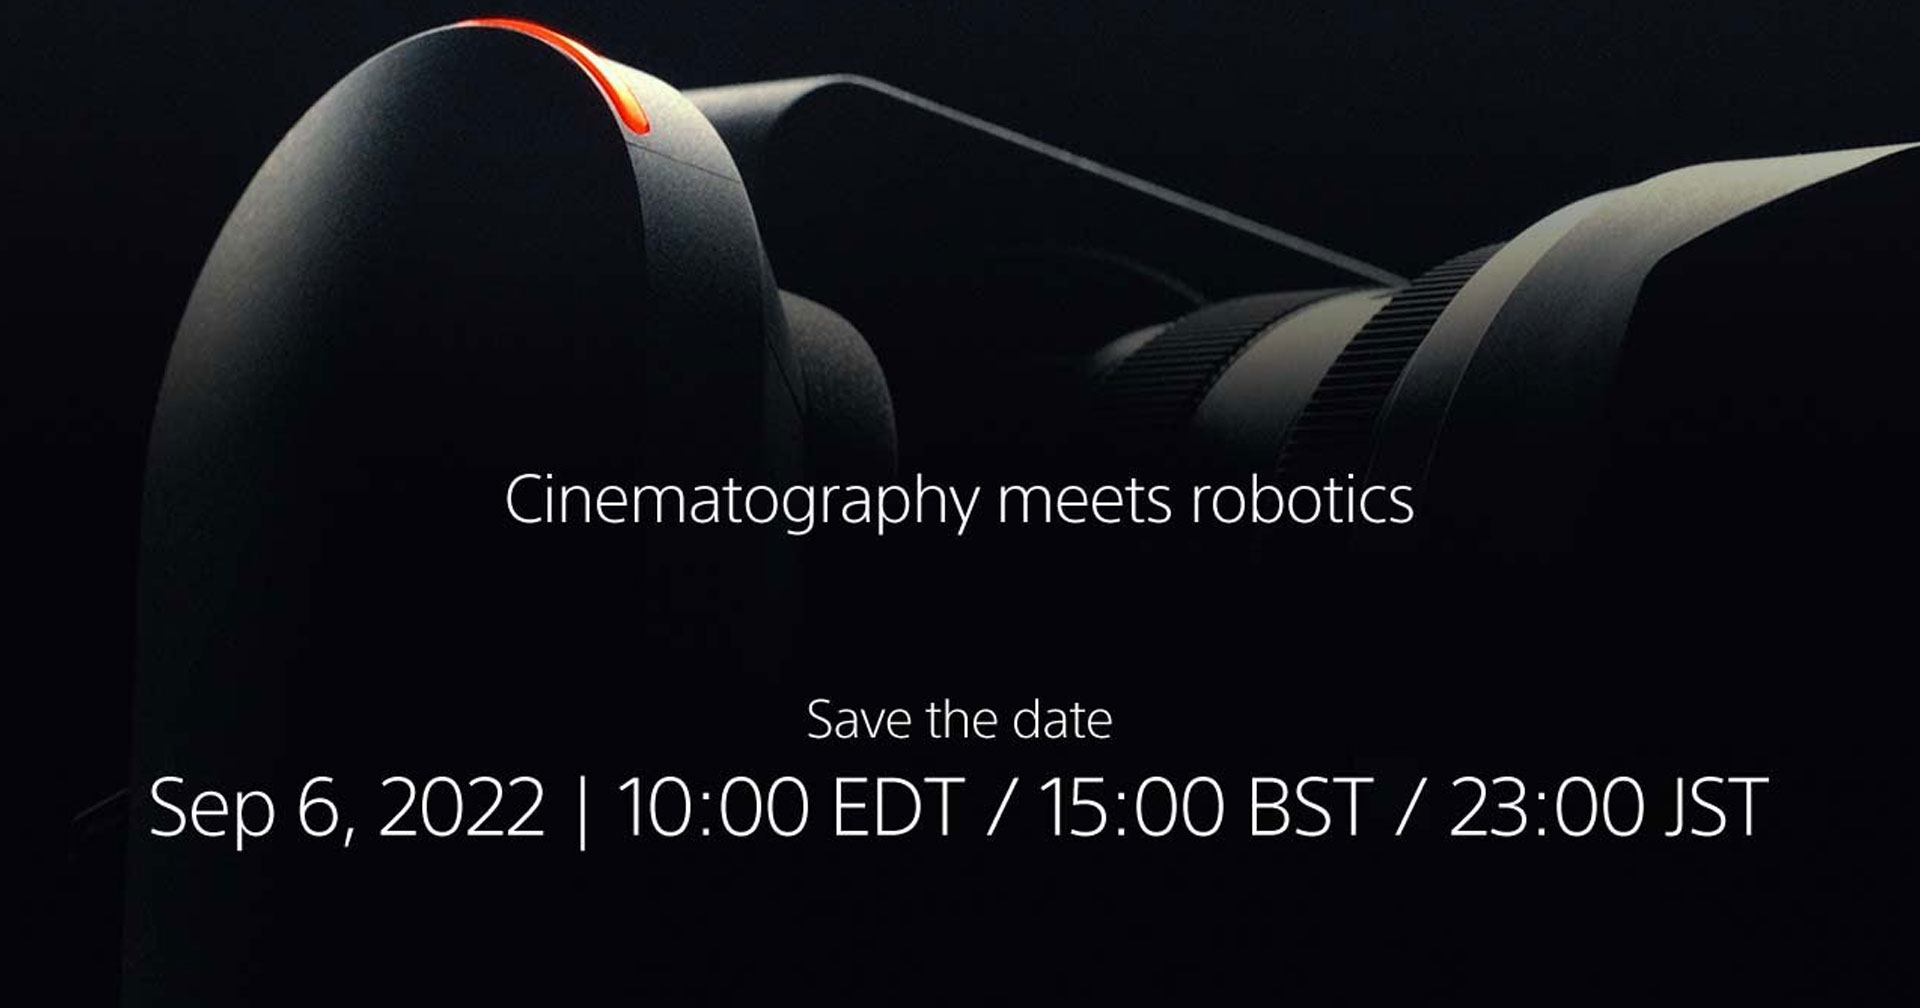 Sony ปล่อยตัวอย่างเตรียมเปิดตัวกล้องใหม่ 6 กันยายน Cinematography meets robotics